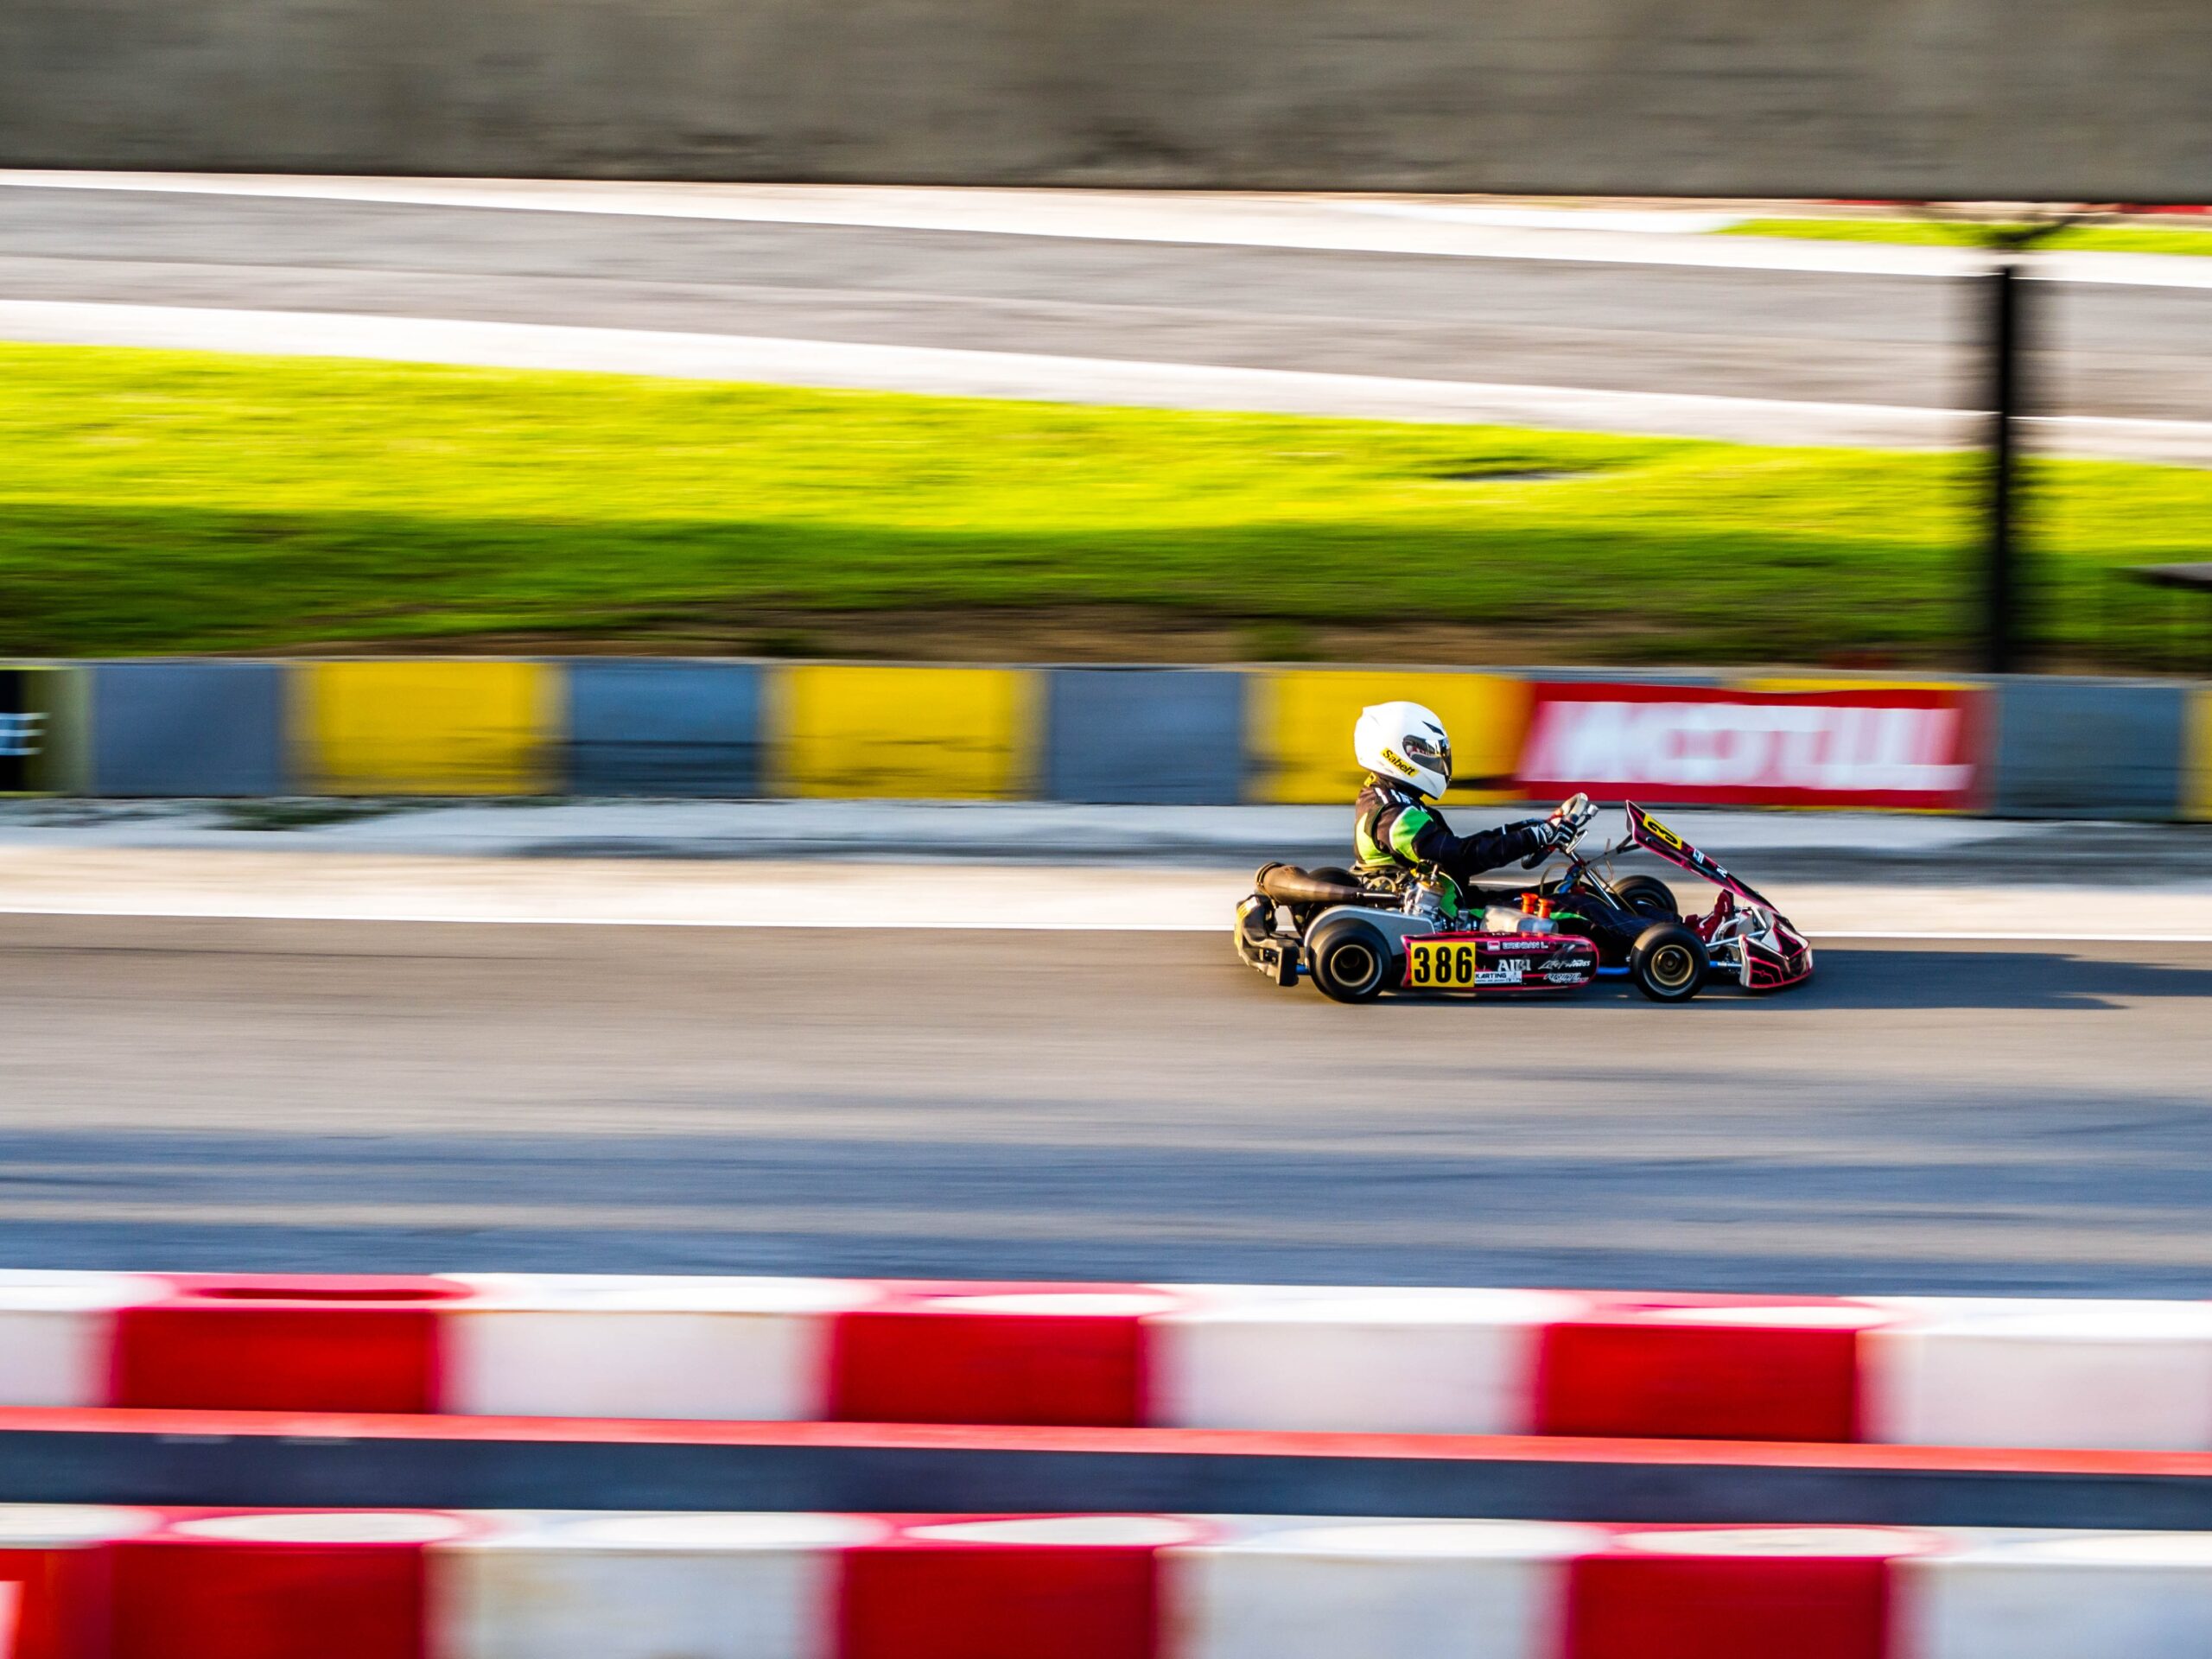 Go-kart on a race track